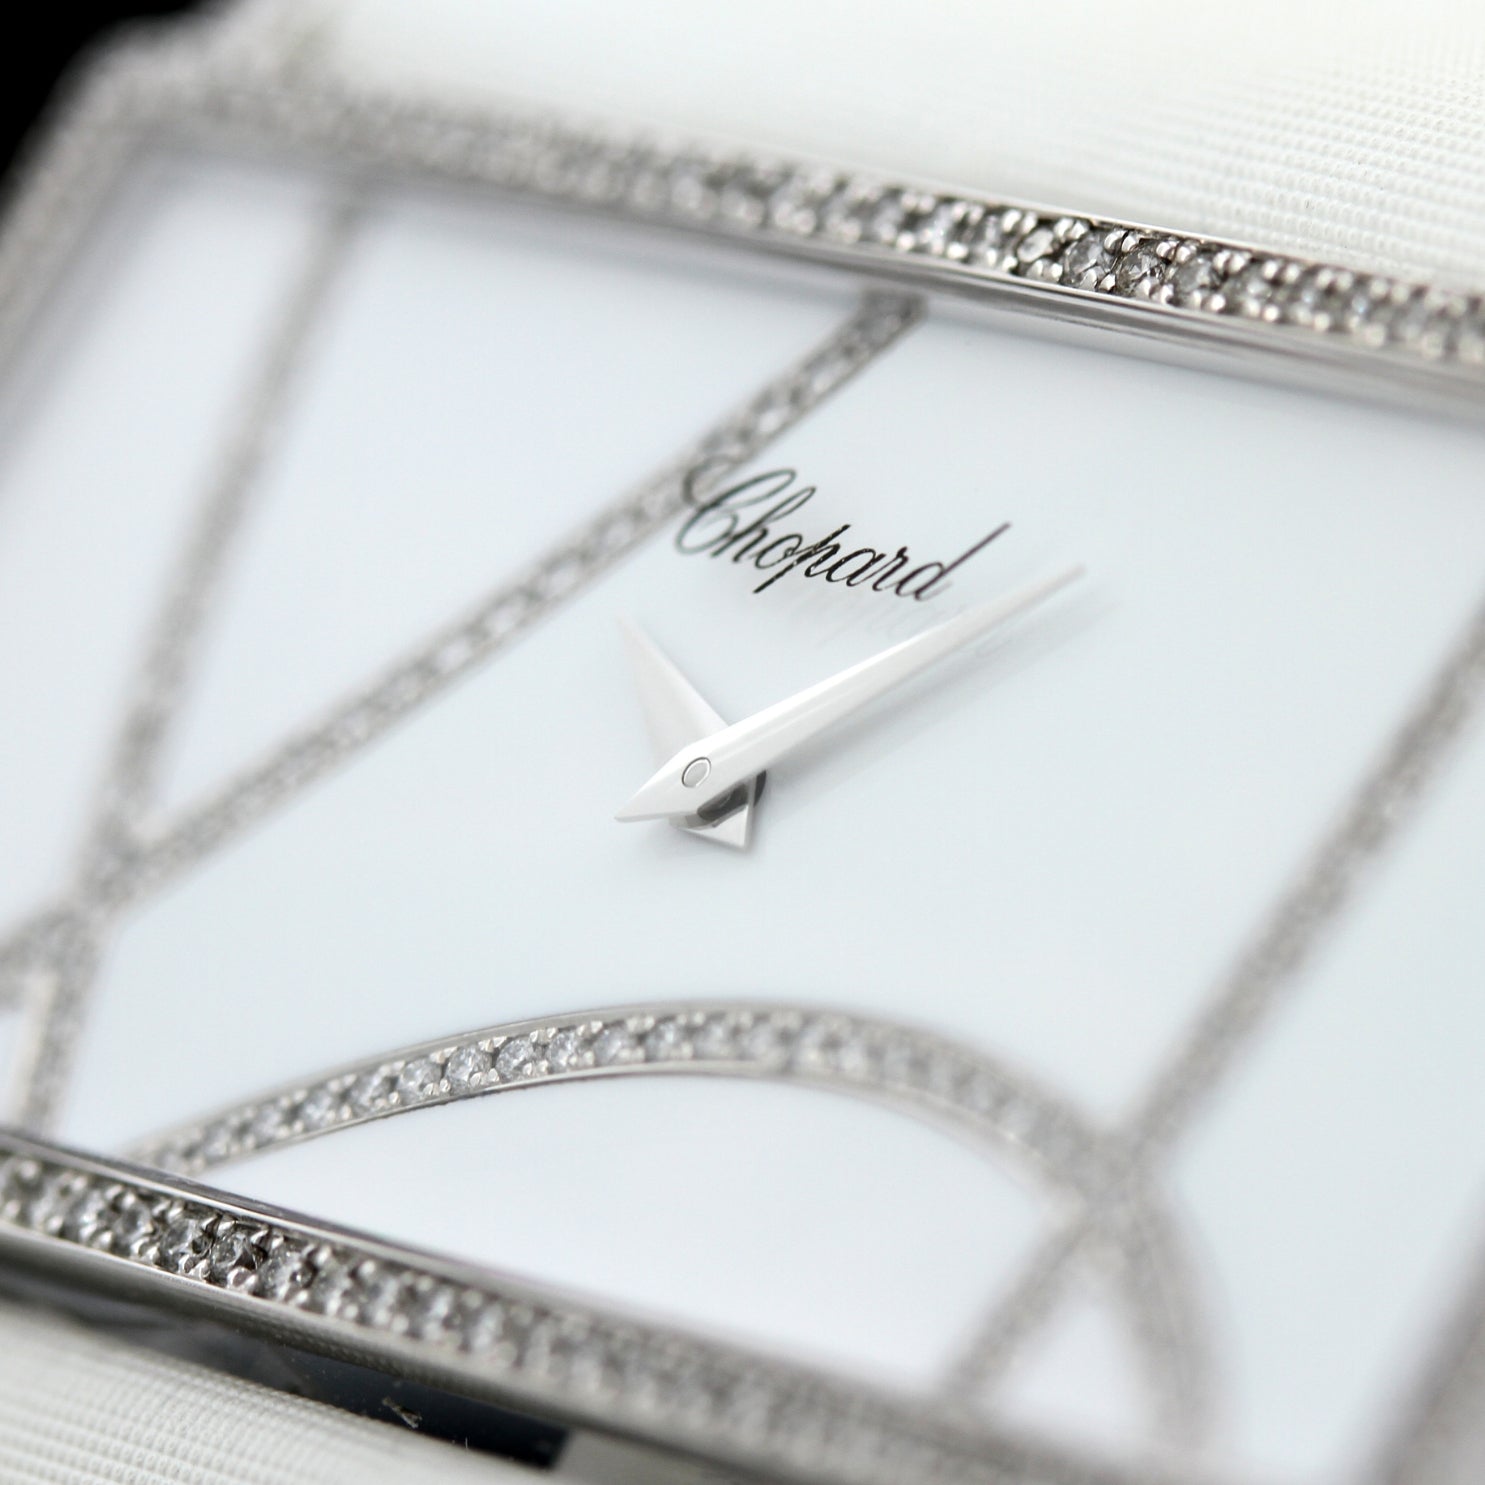 Chopard Ladies Classic, Diamond Rectangle, 18kt Weissgold, 240 Diamonds, Enamel Dial, 43x20.5mm, Ref. 139130-1001, B+P - LUXUHRIA